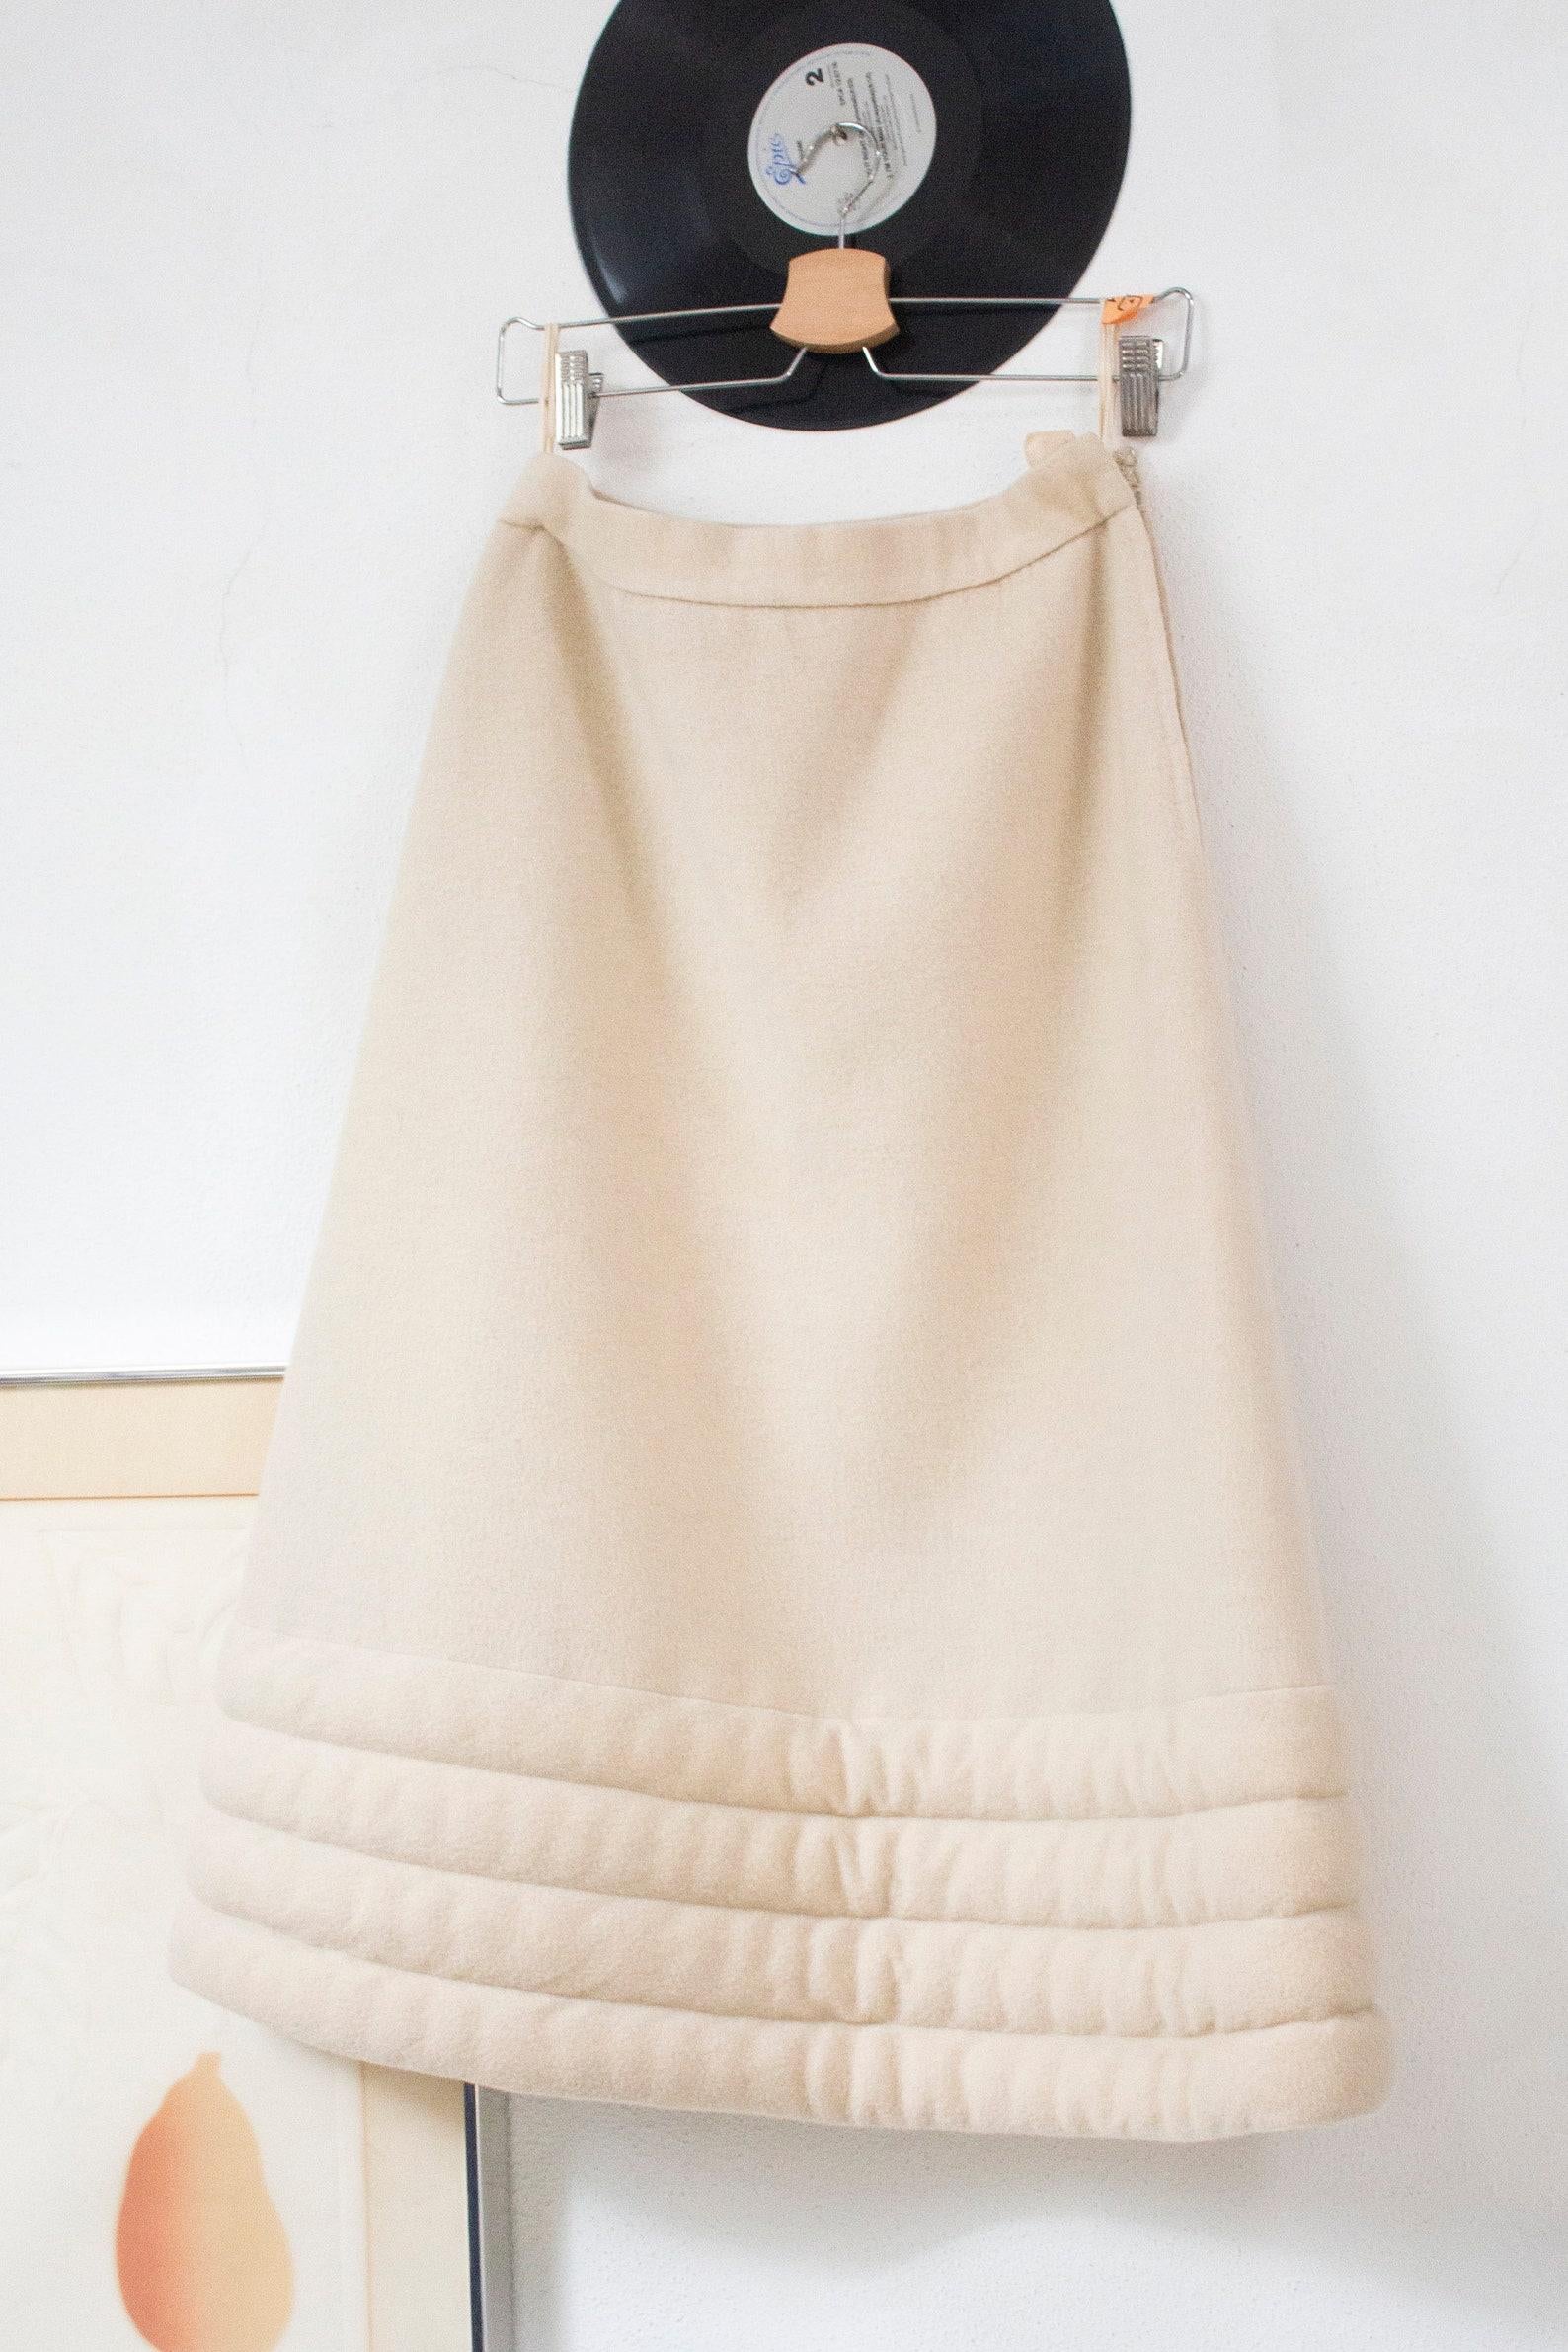 Mila Schön Alta Moda winter 1973 écru cashmere wool space age skirt suit  For Sale 2